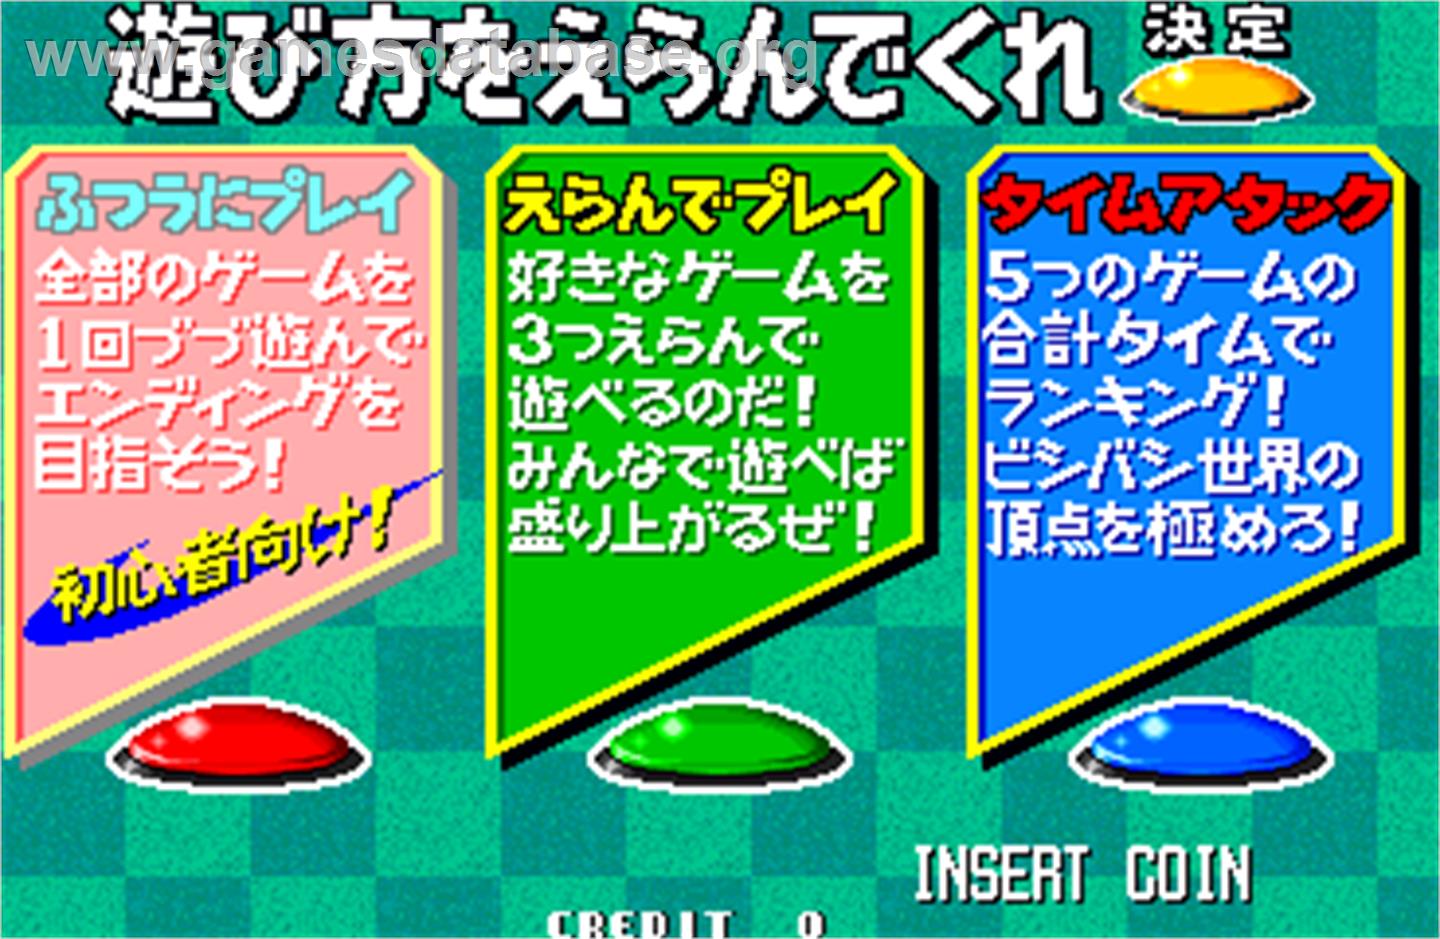 Hyper Bishi Bashi Champ - Arcade - Artwork - Select Screen